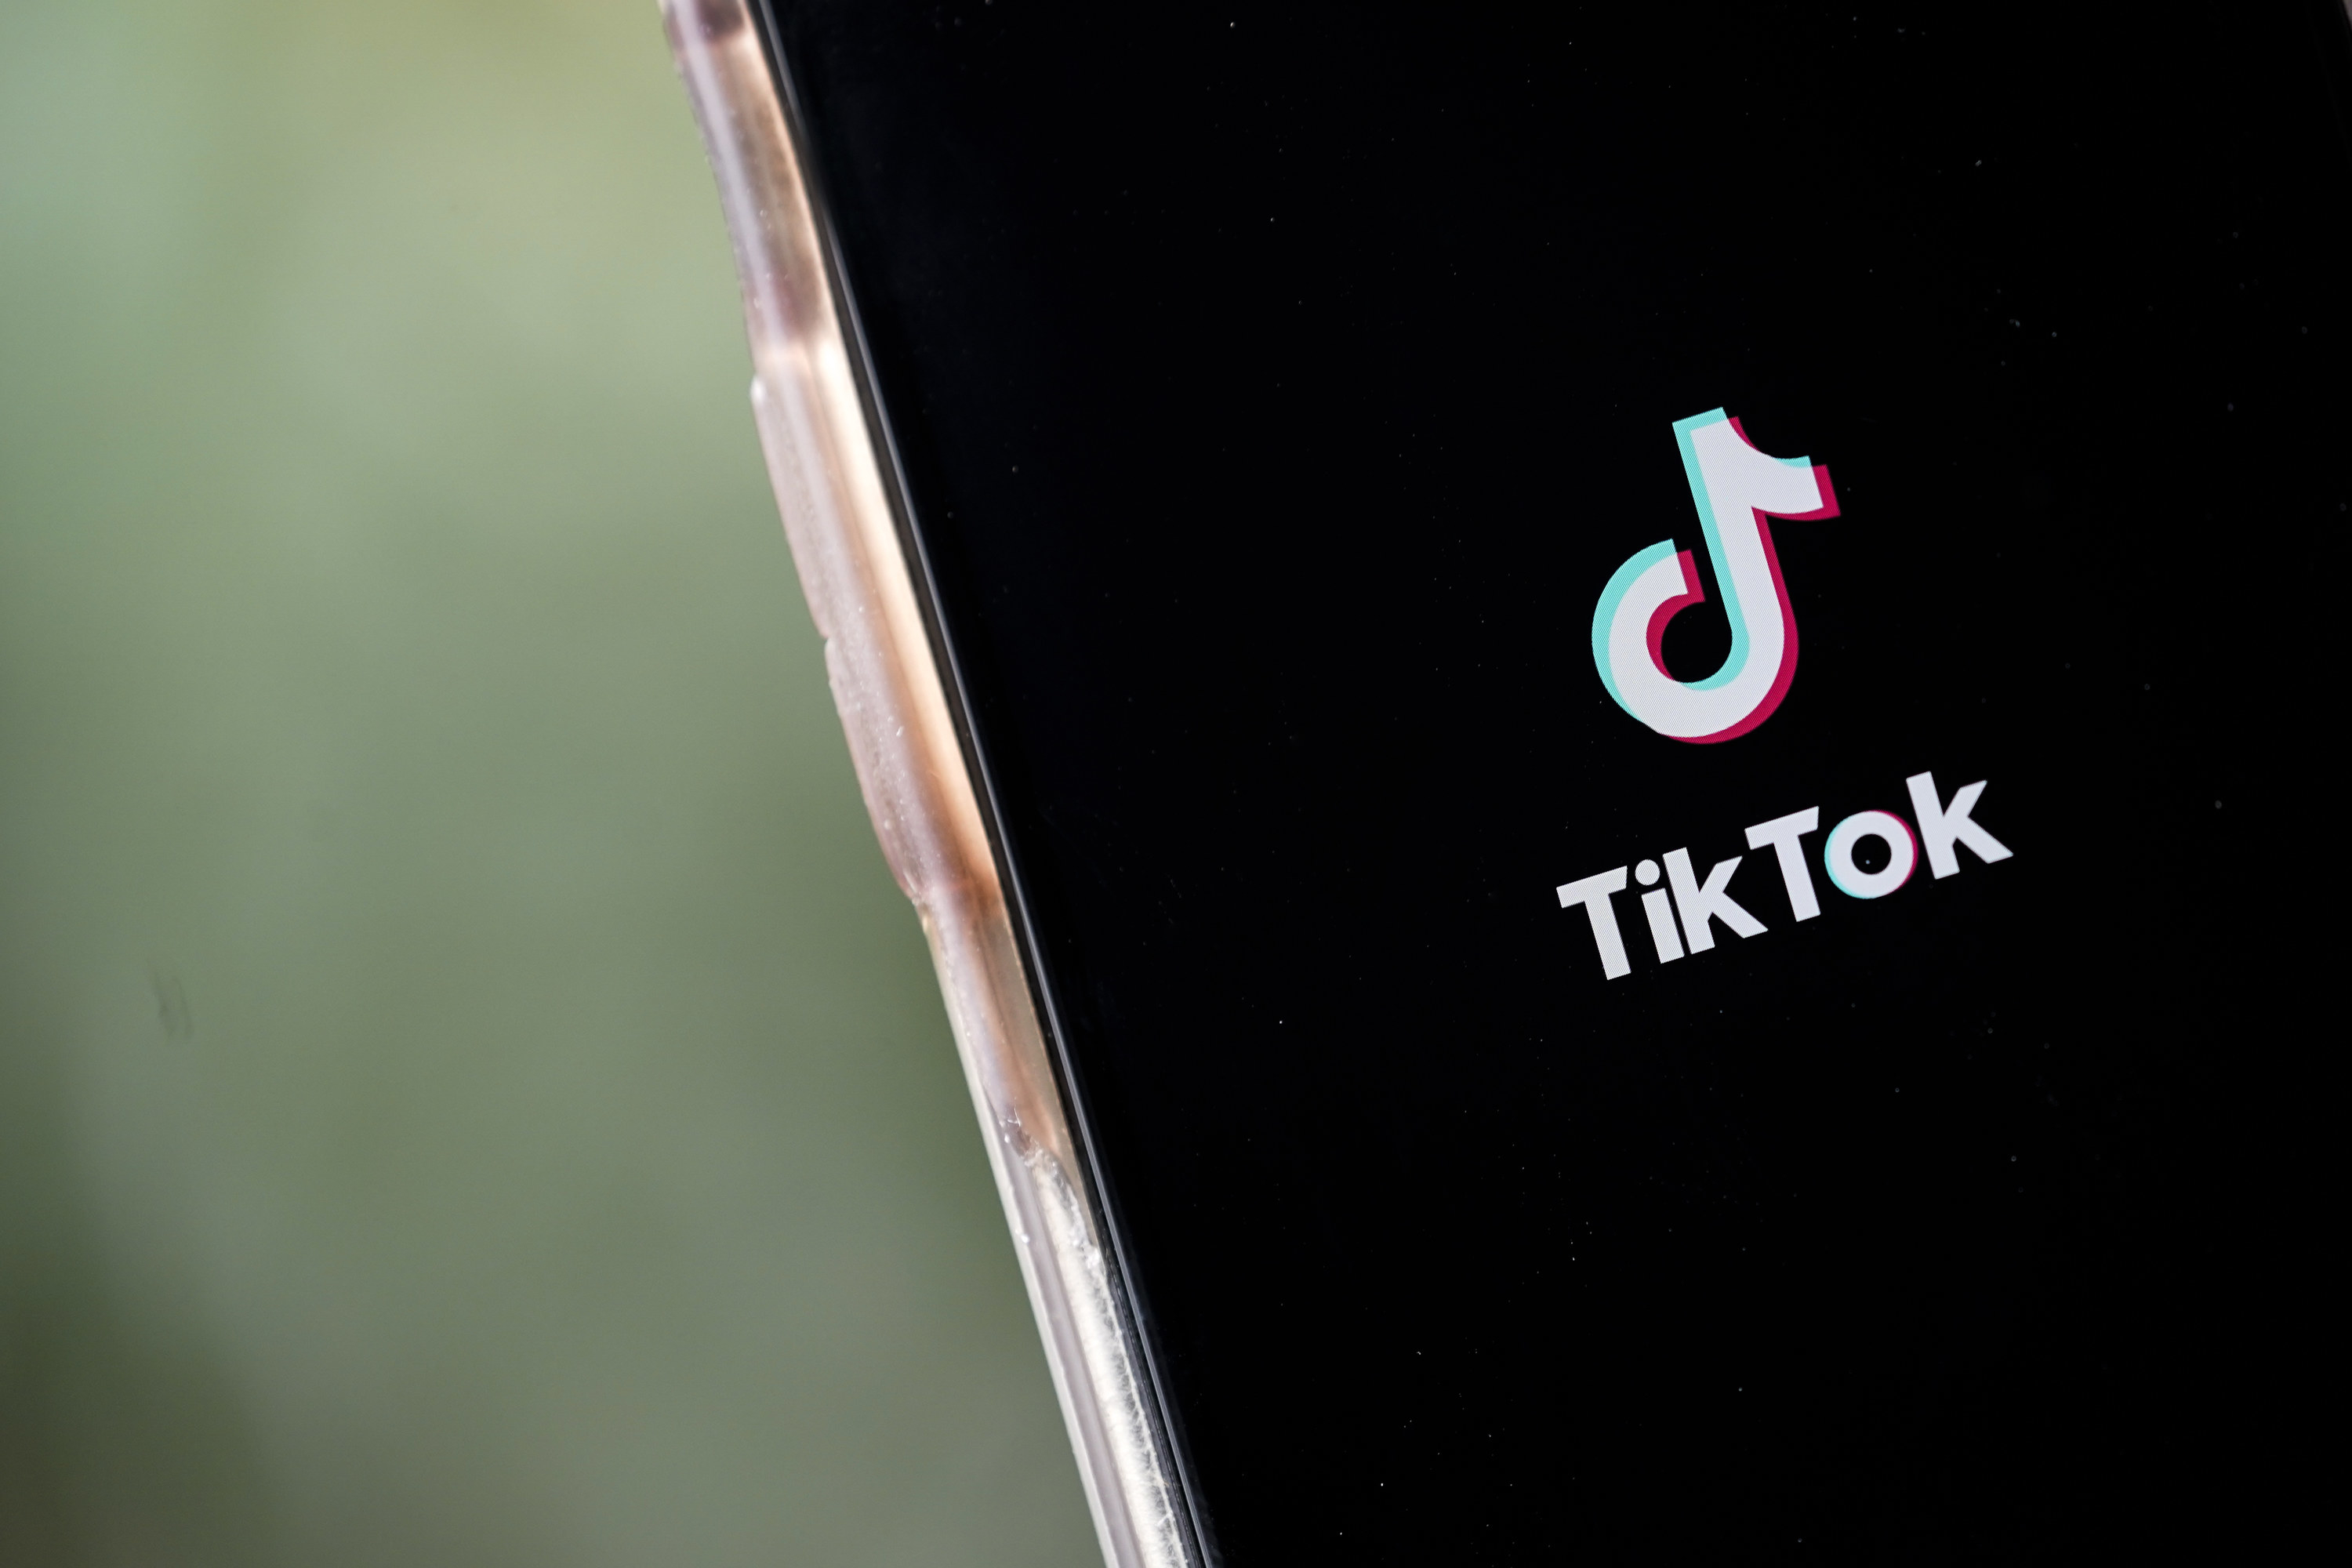 The TikTok app opening on a smartphone